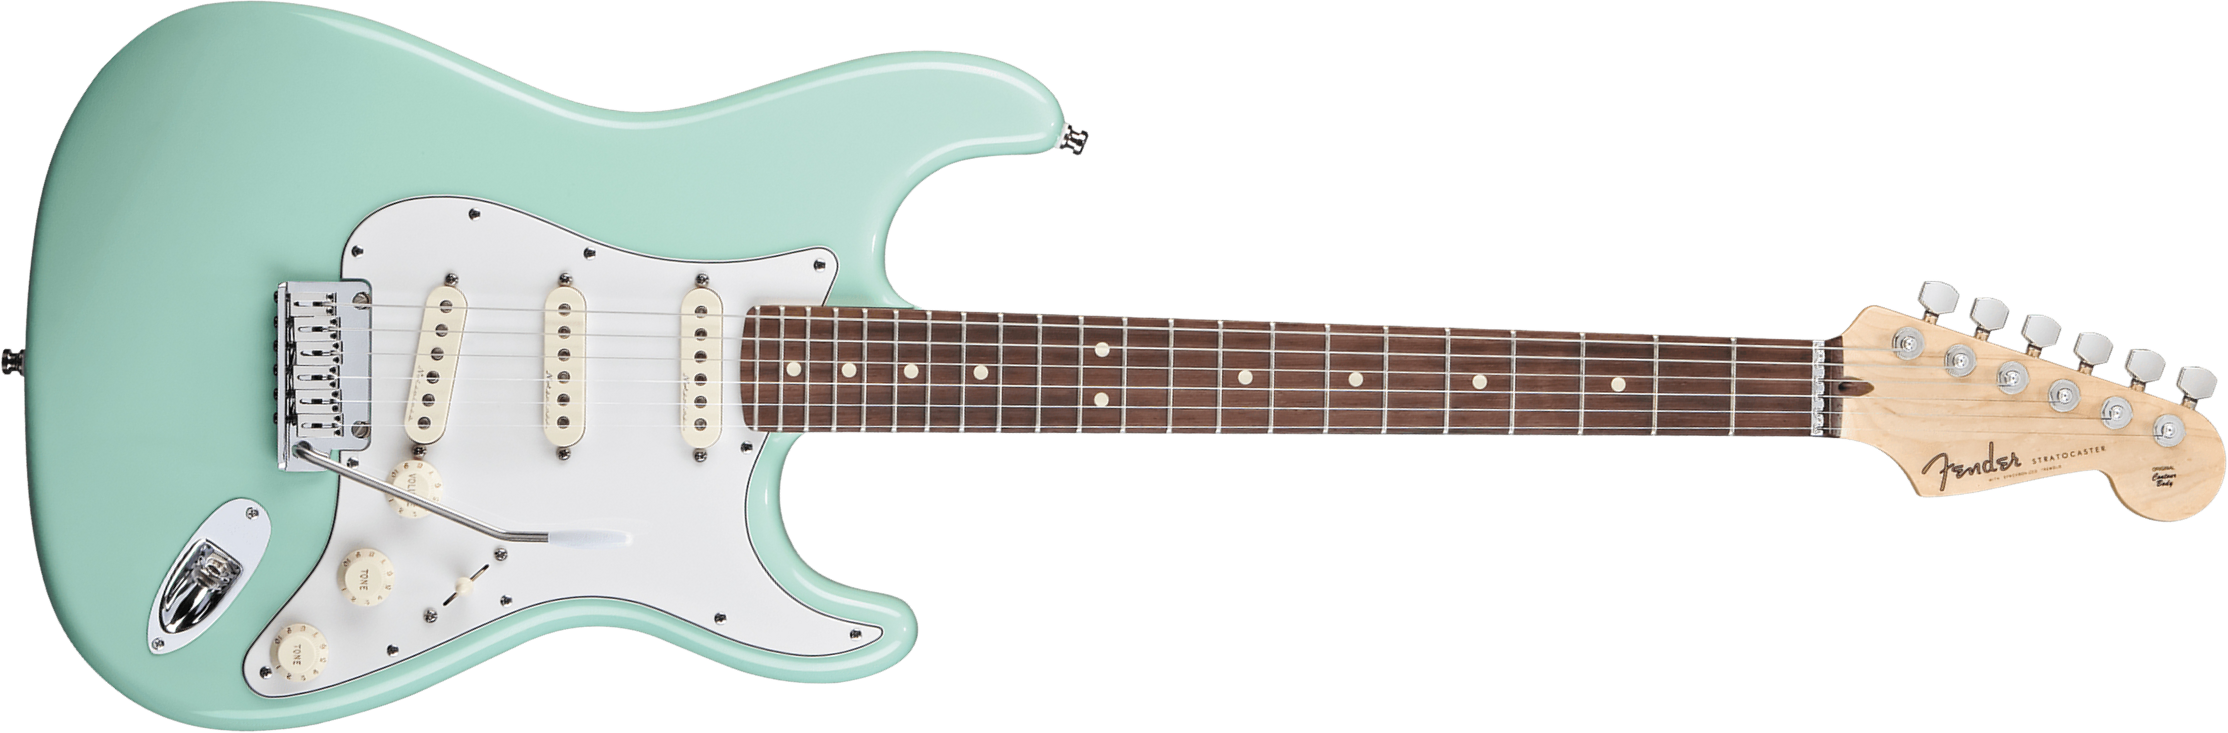 Fender Custom Shop Jeff Beck Strat 3s Trem Rw - Nos Surf Green - Str shape electric guitar - Main picture